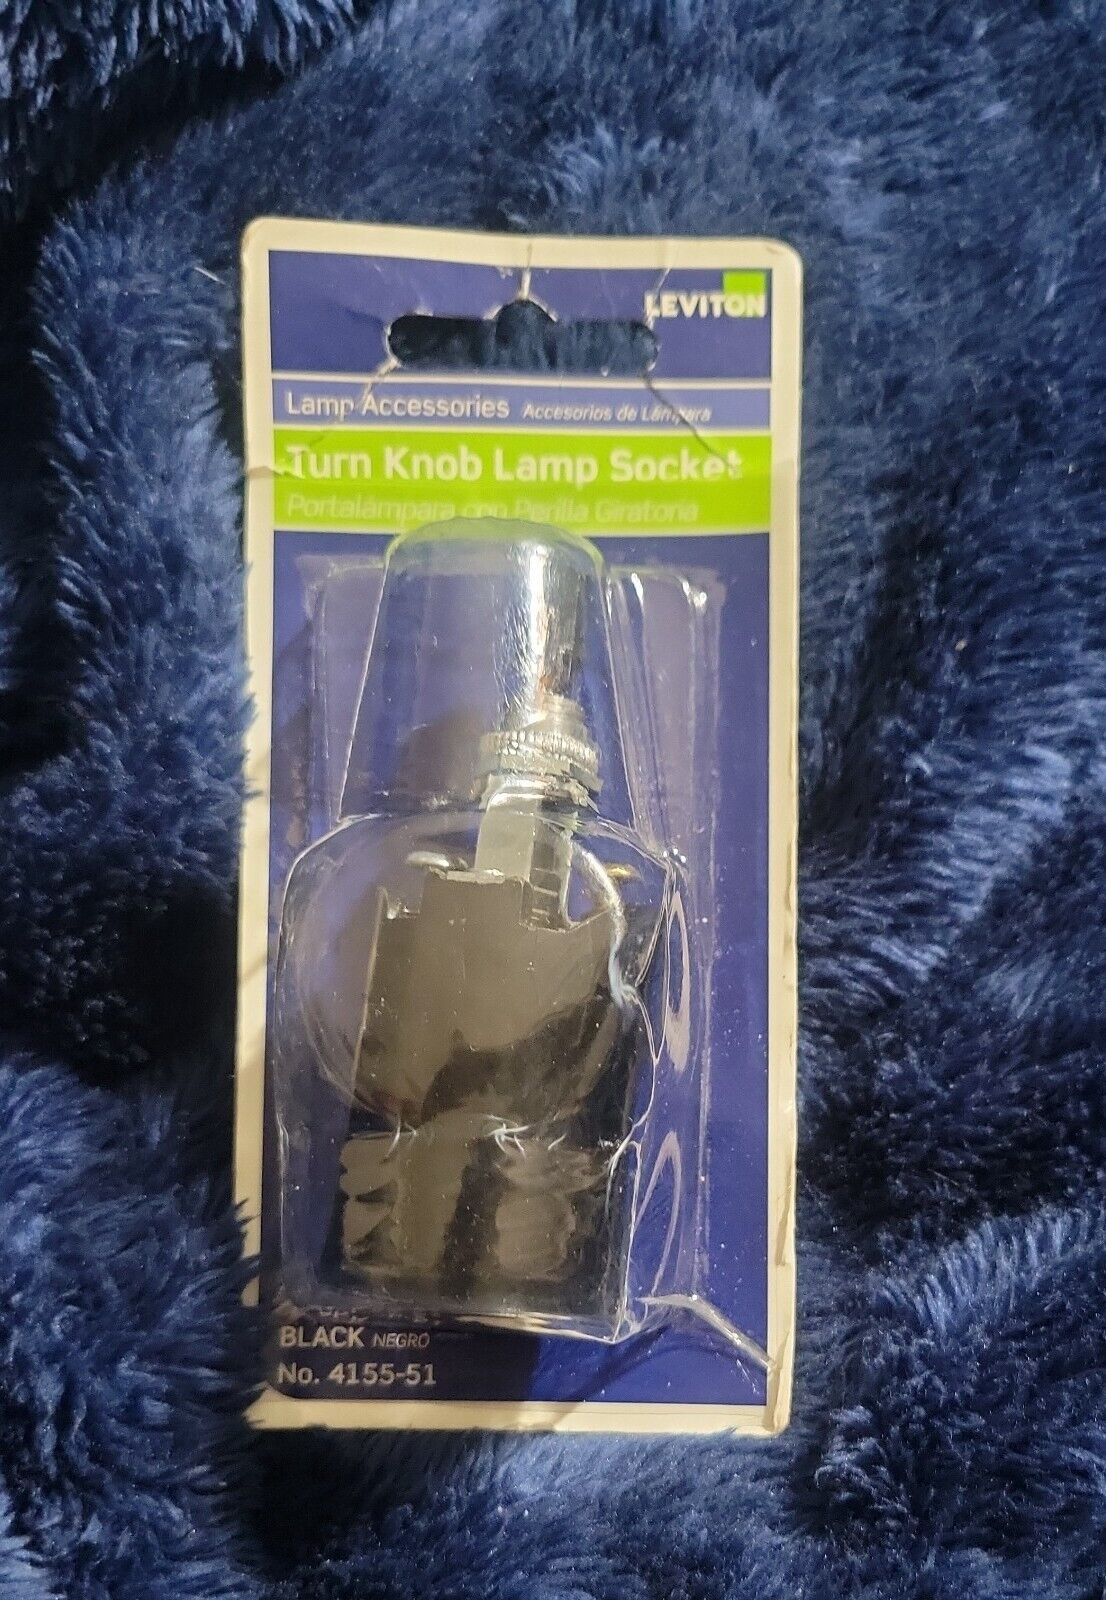 Leviton CD-C20-04155-11A Turn Knob Lamp Socket Black no. 4155-51 